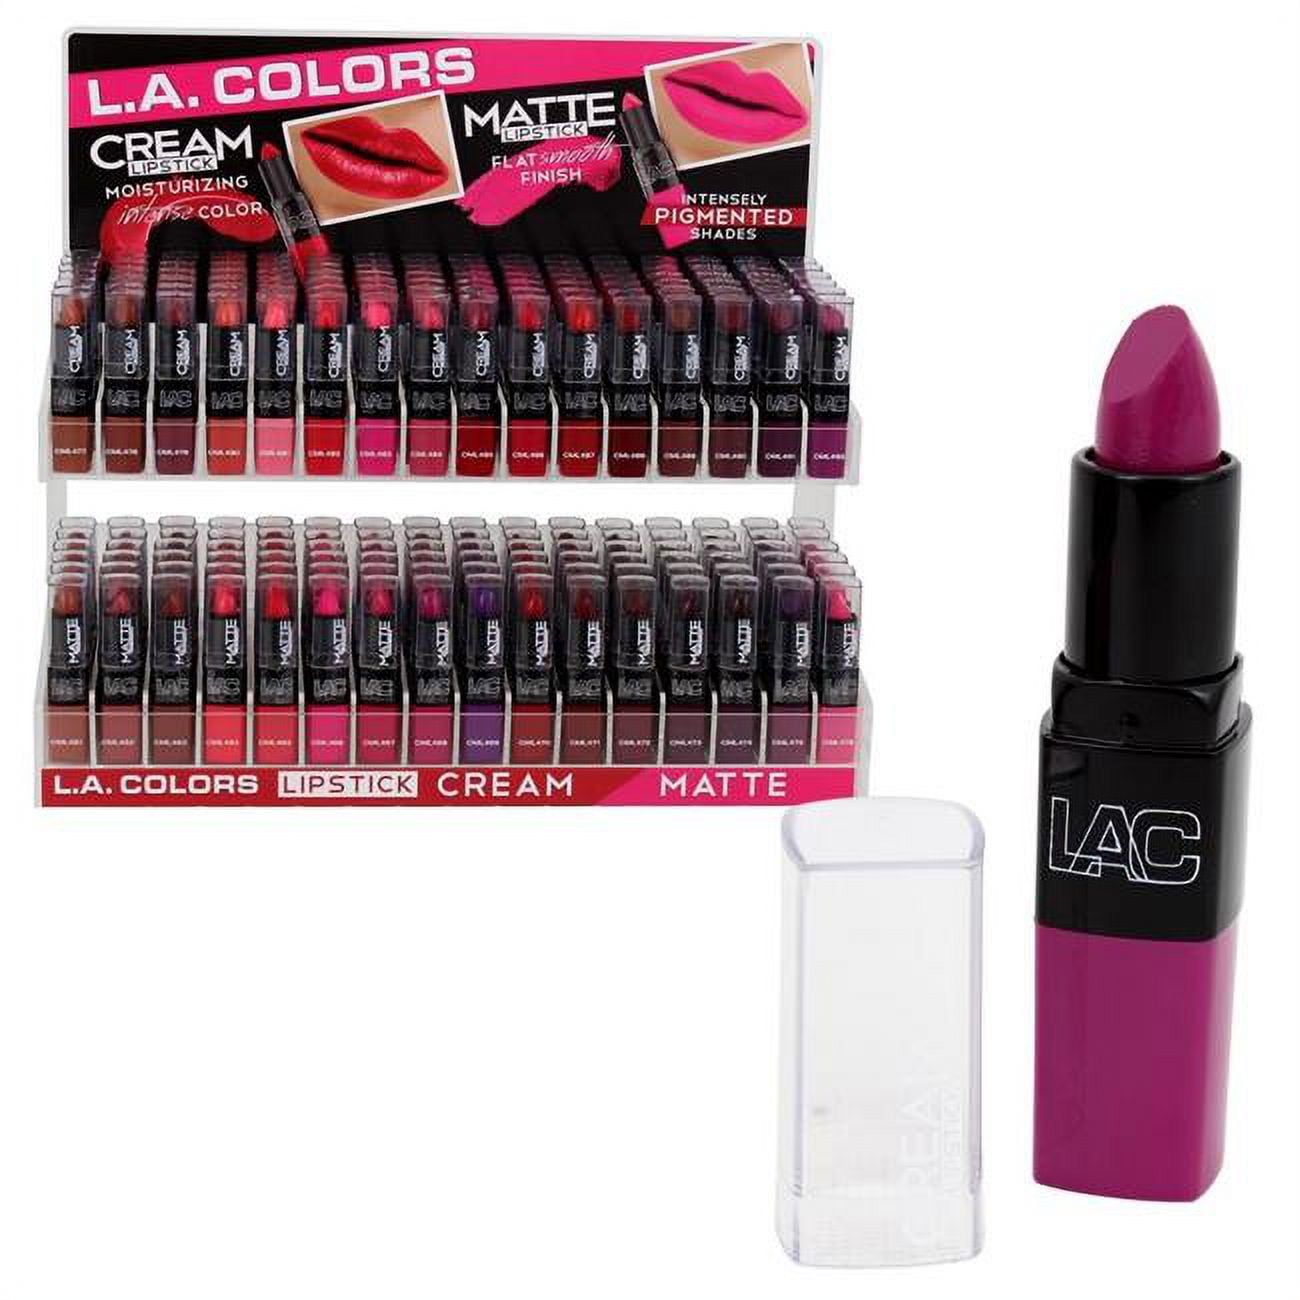 0.13 Oz L.a. Colors Cream & Matte Lipstick Assortment In Display - Case Of 384